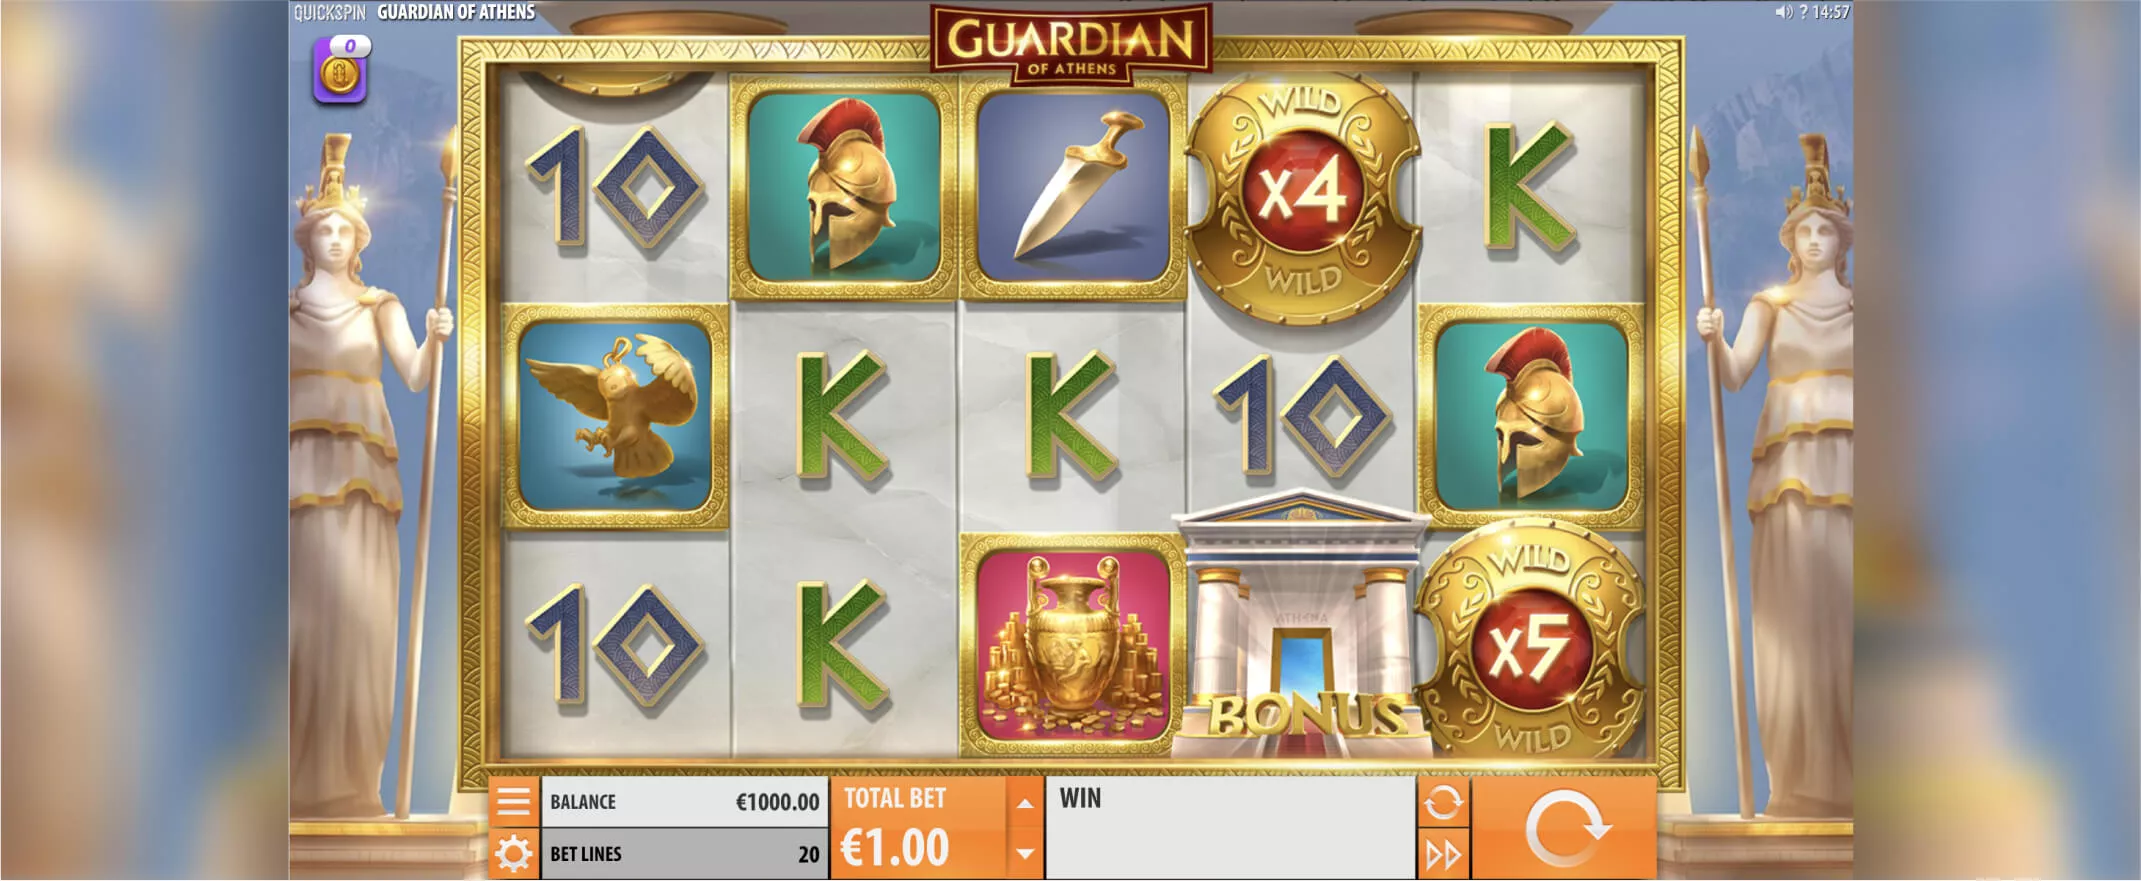 Guardian of Athens slot screenshot of the reels